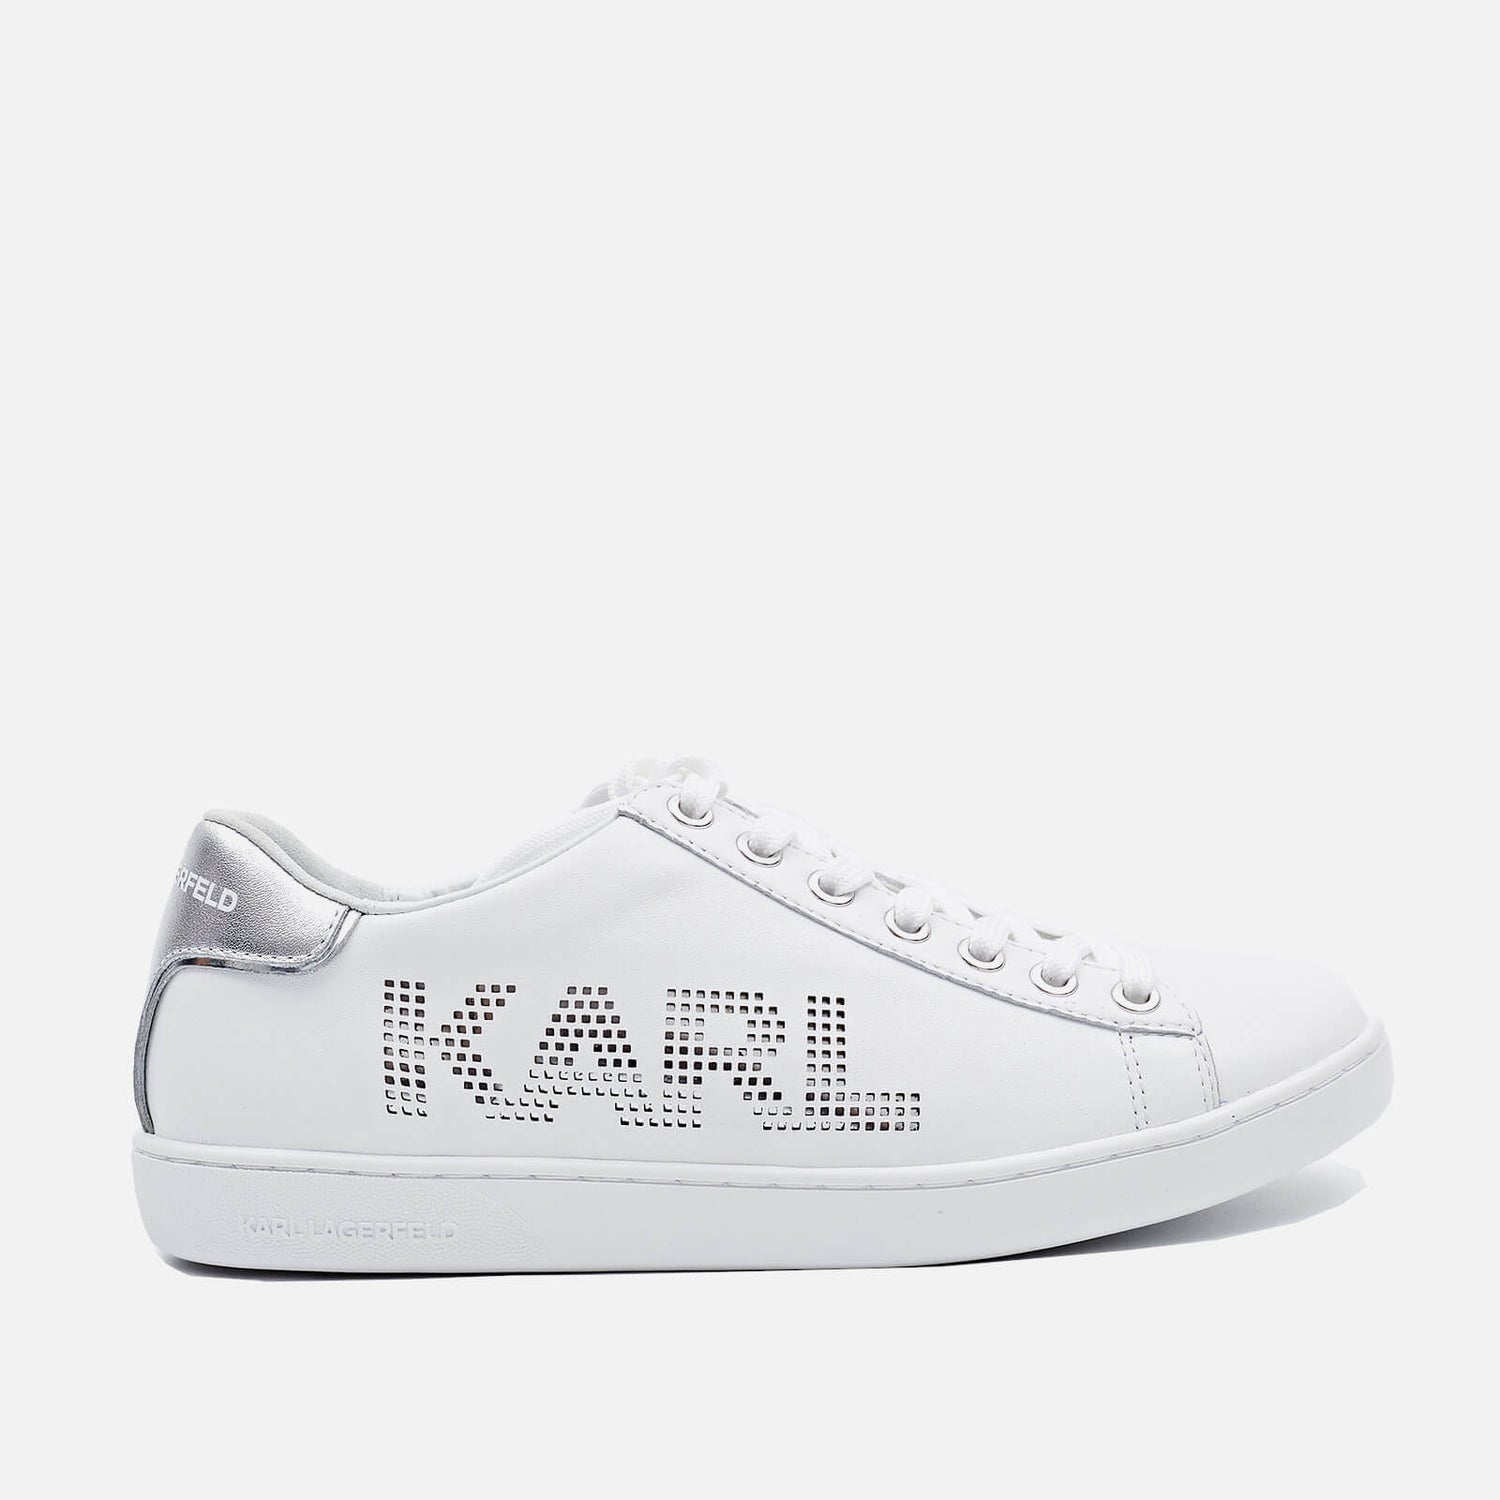 KARL LAGERFELD Women's Kupsole Ii Leather Trainers - White/Silver